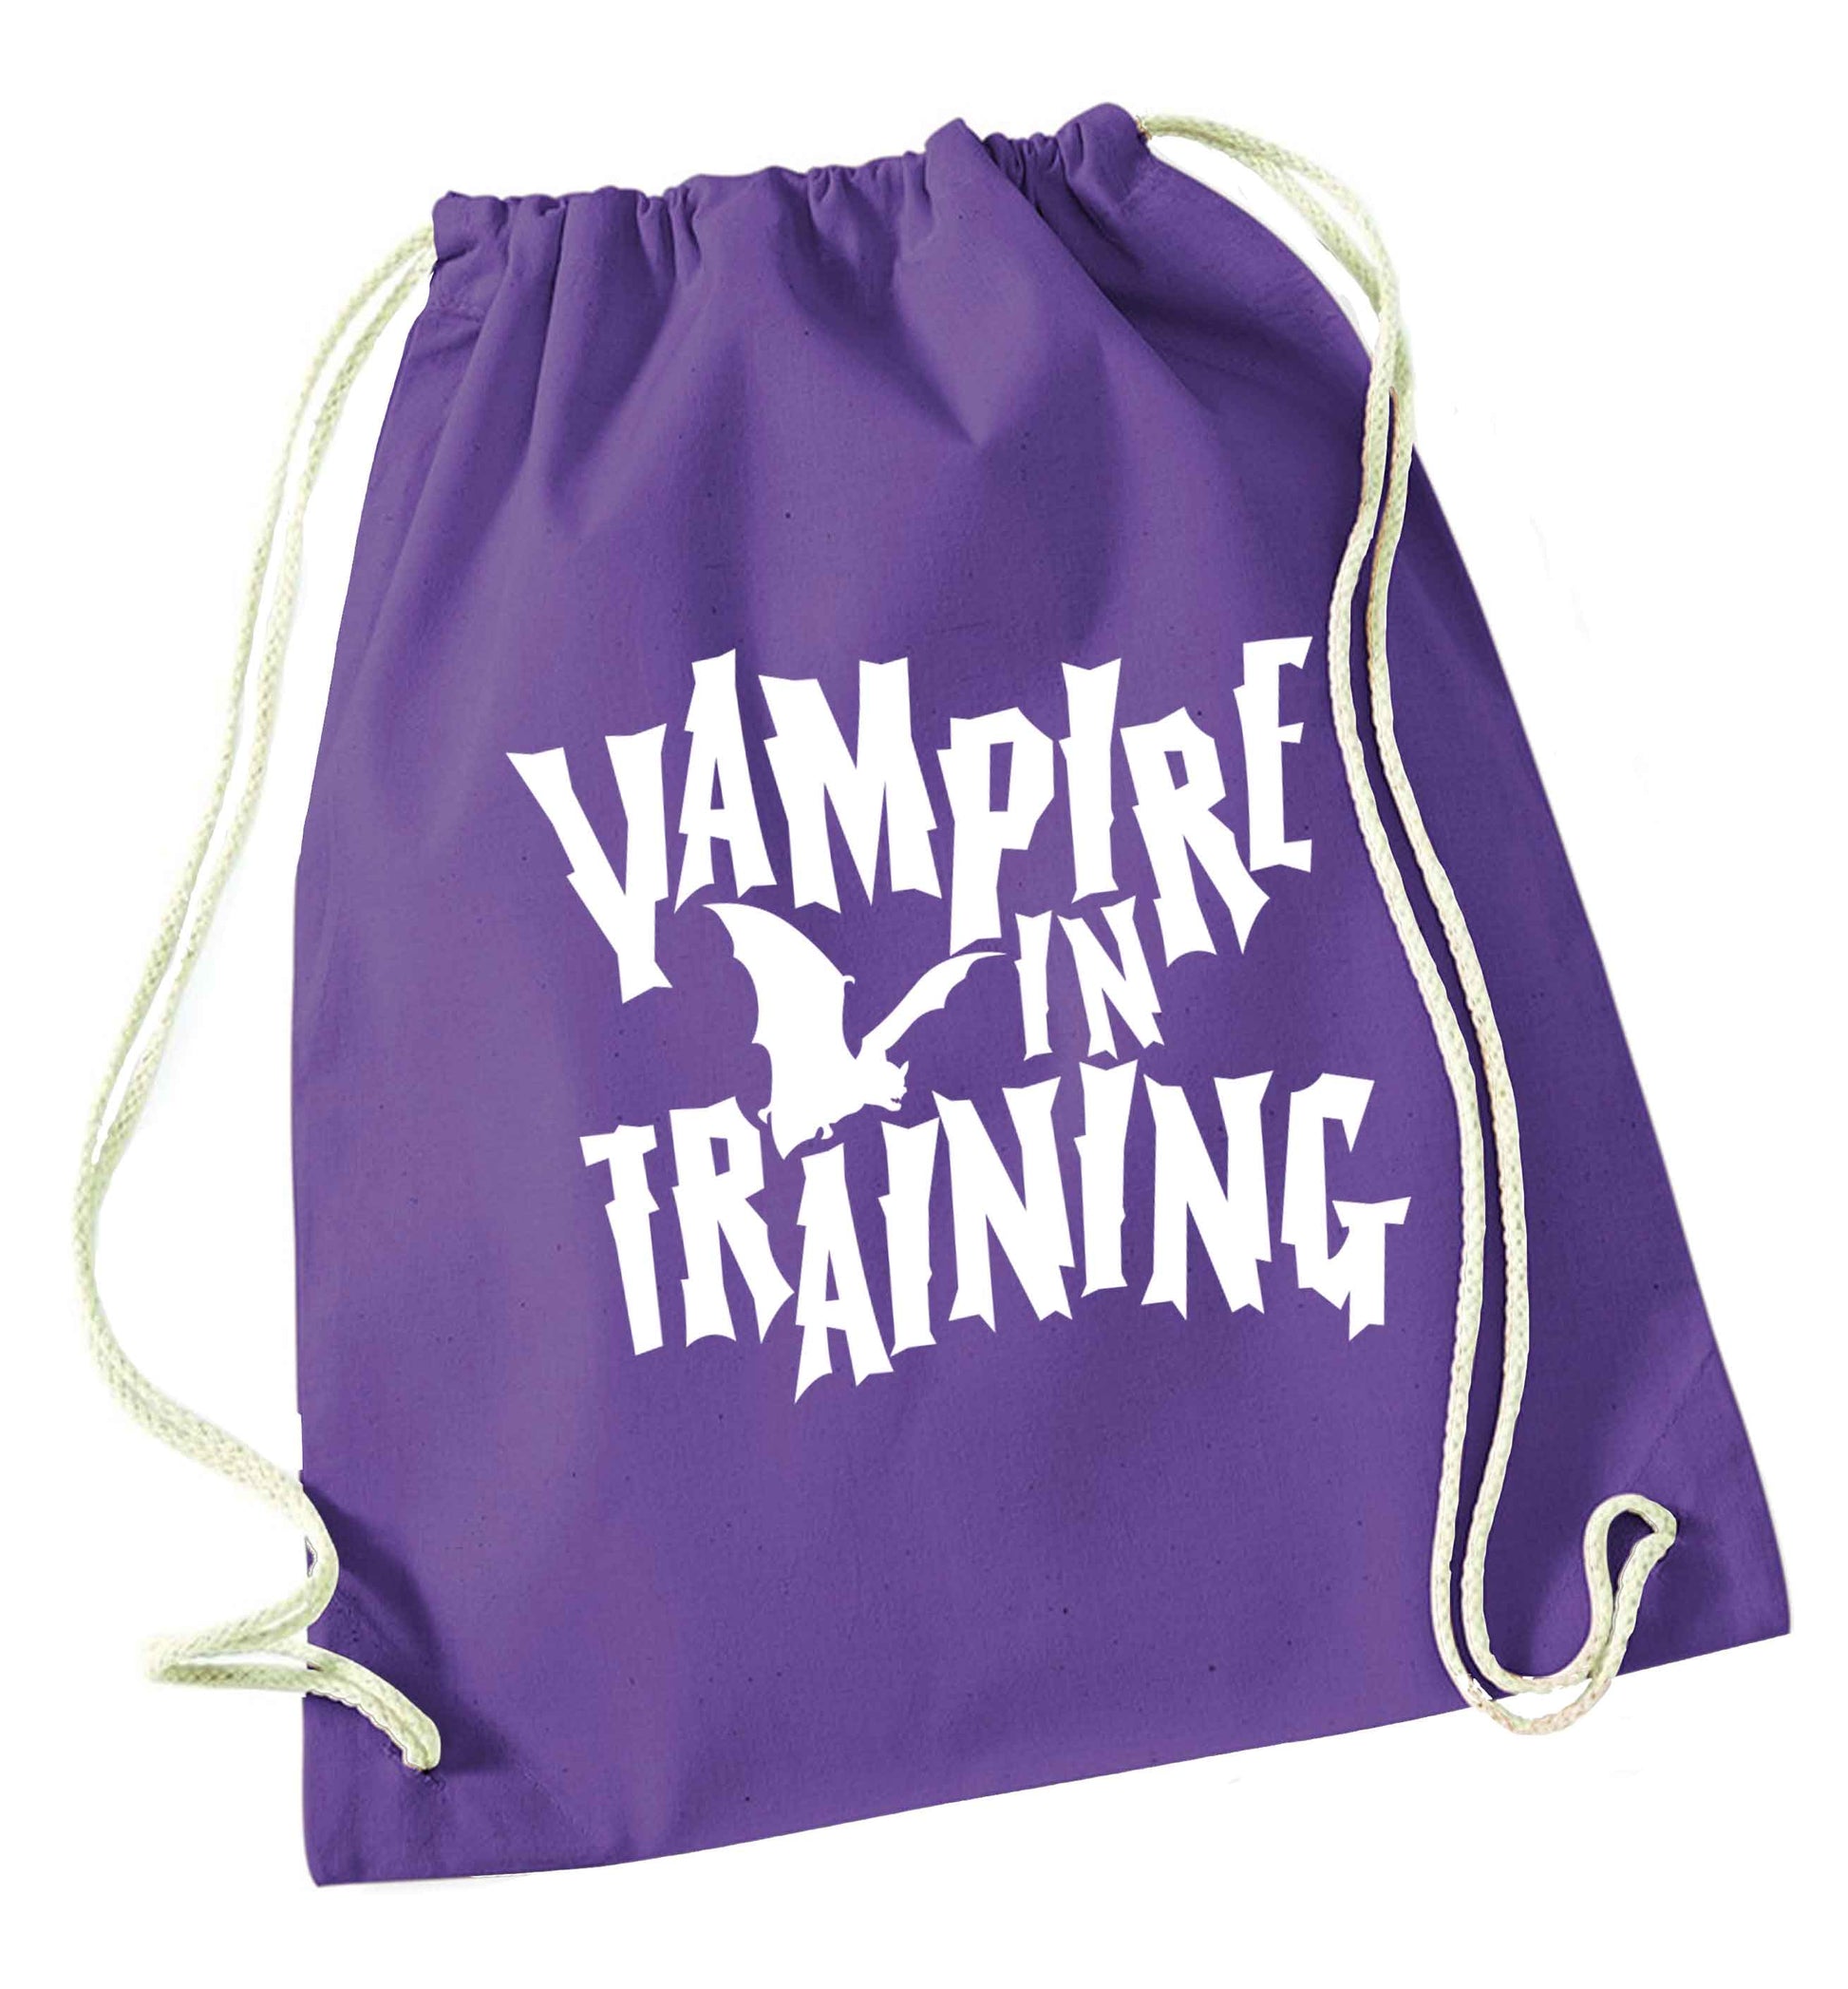 Vampire in training purple drawstring bag